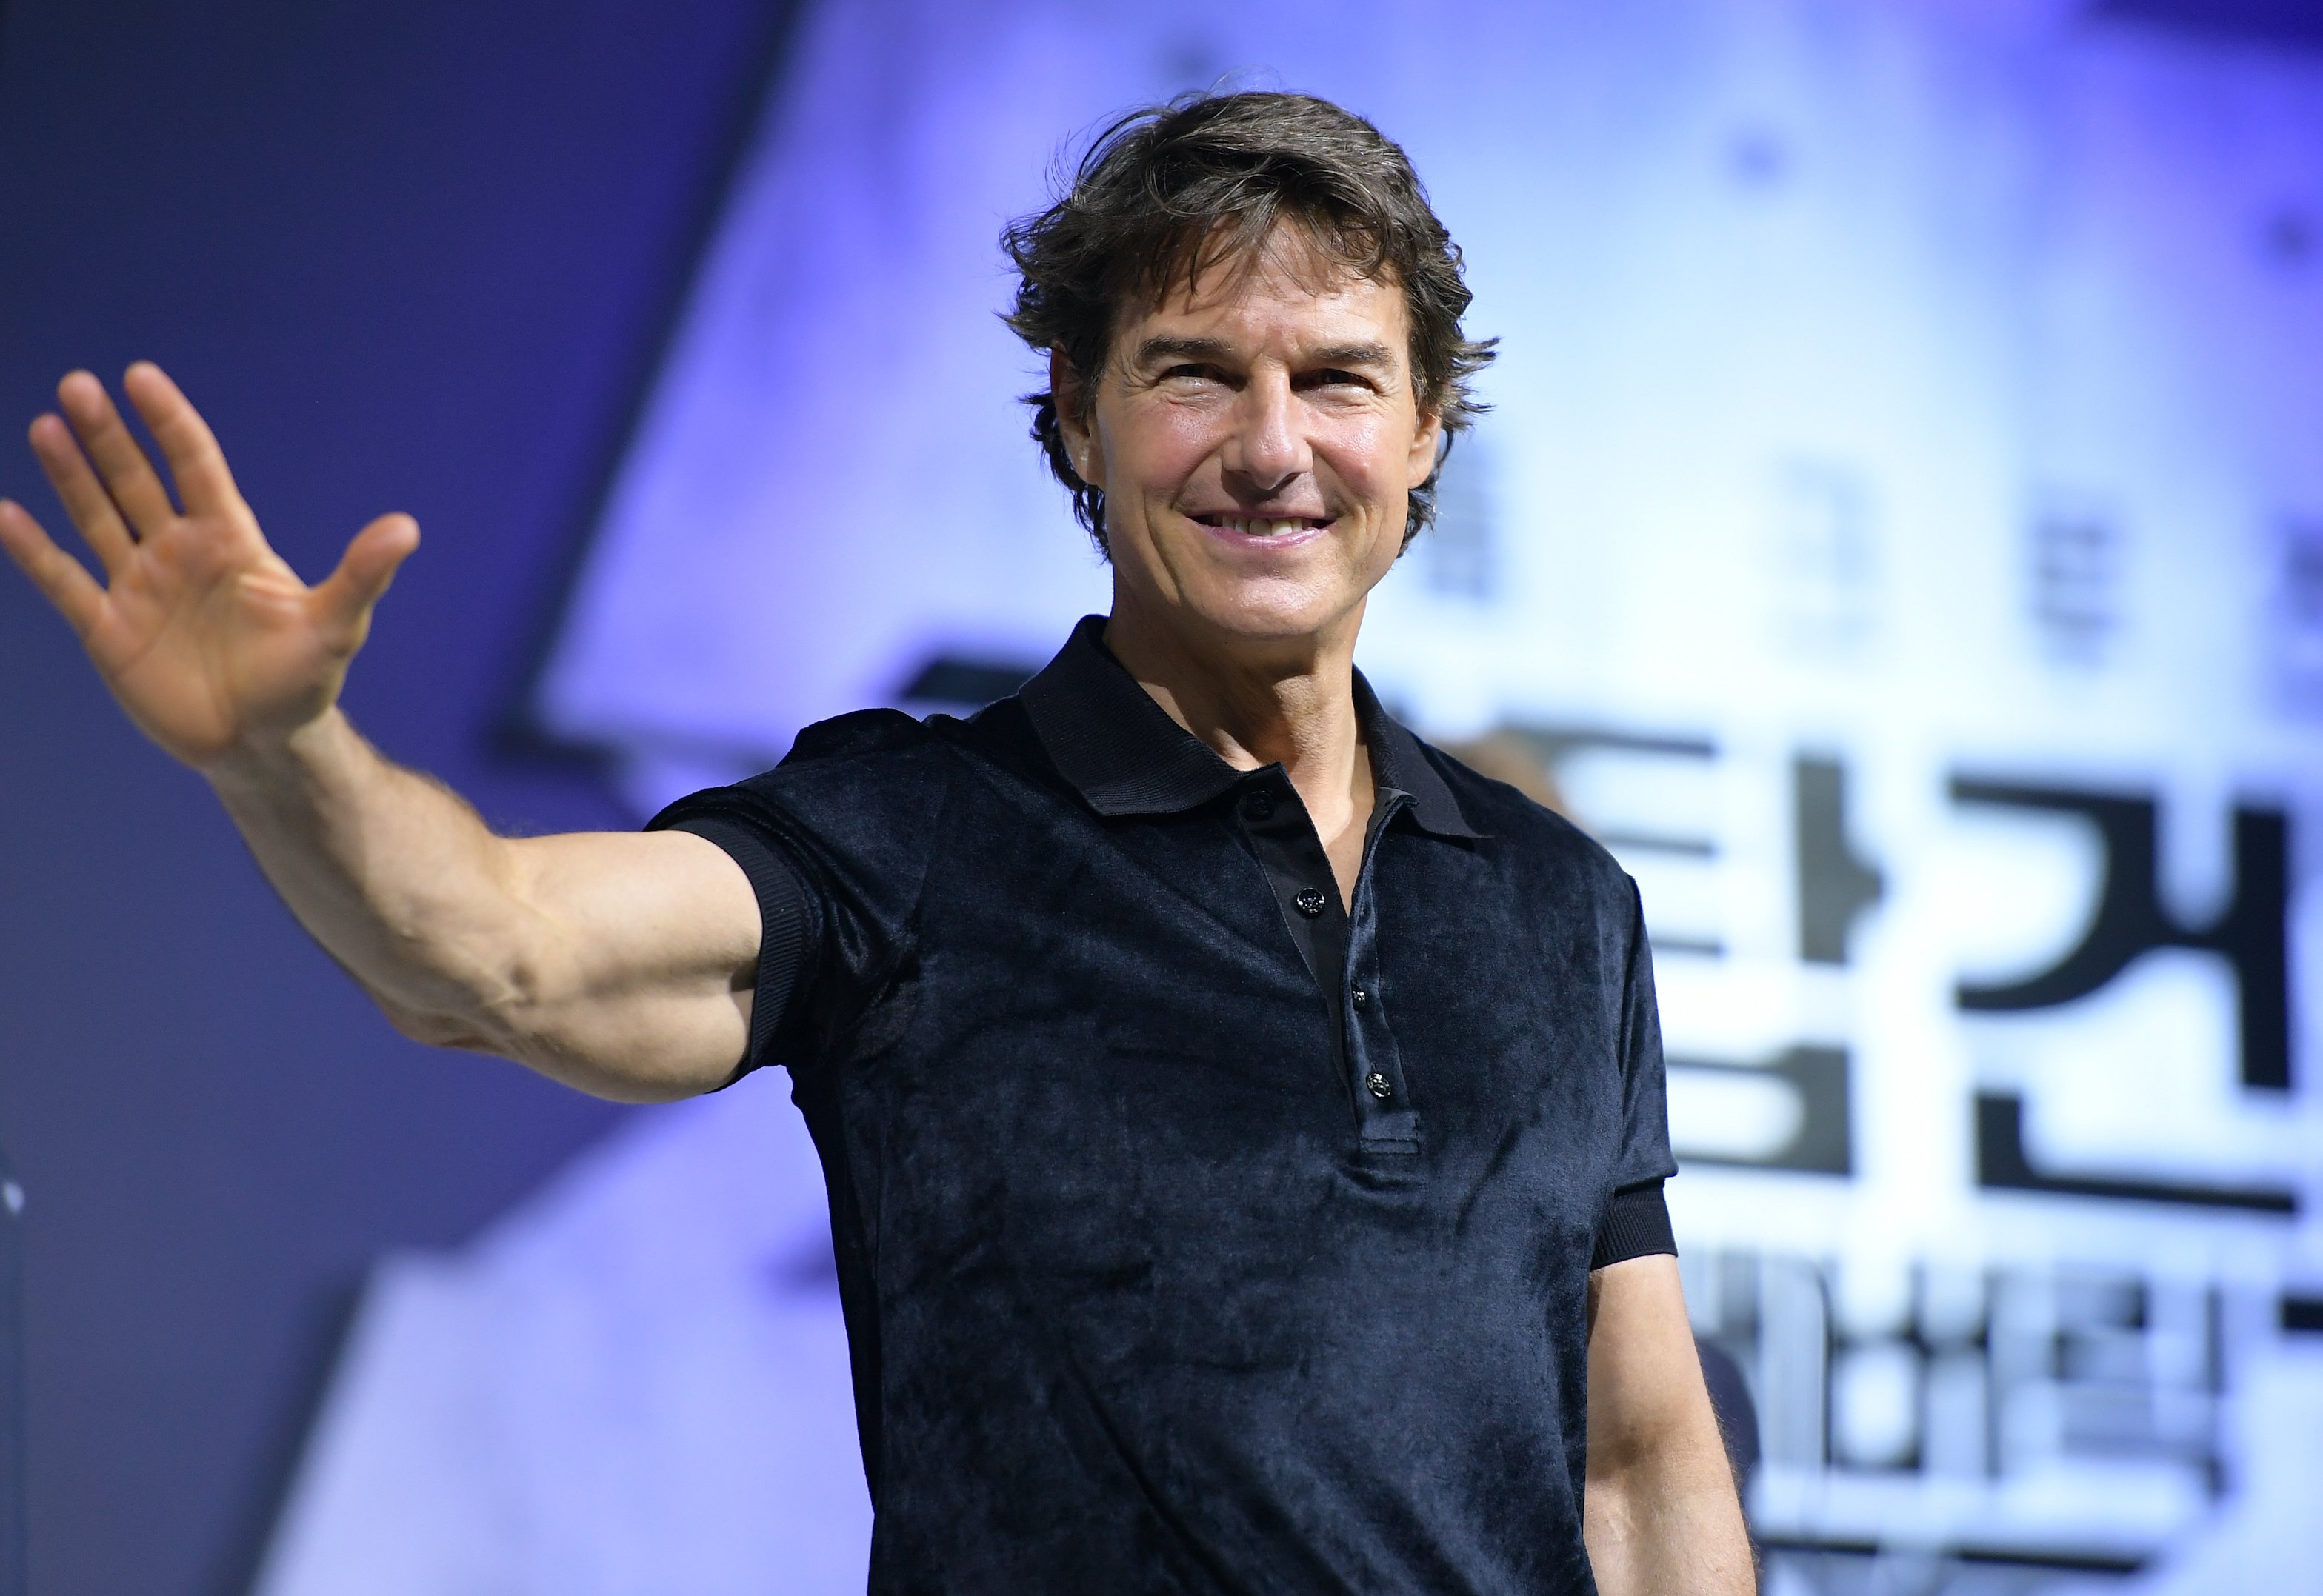 Tom Cruise attends a press conference for Top Gun: Maverick in Korea